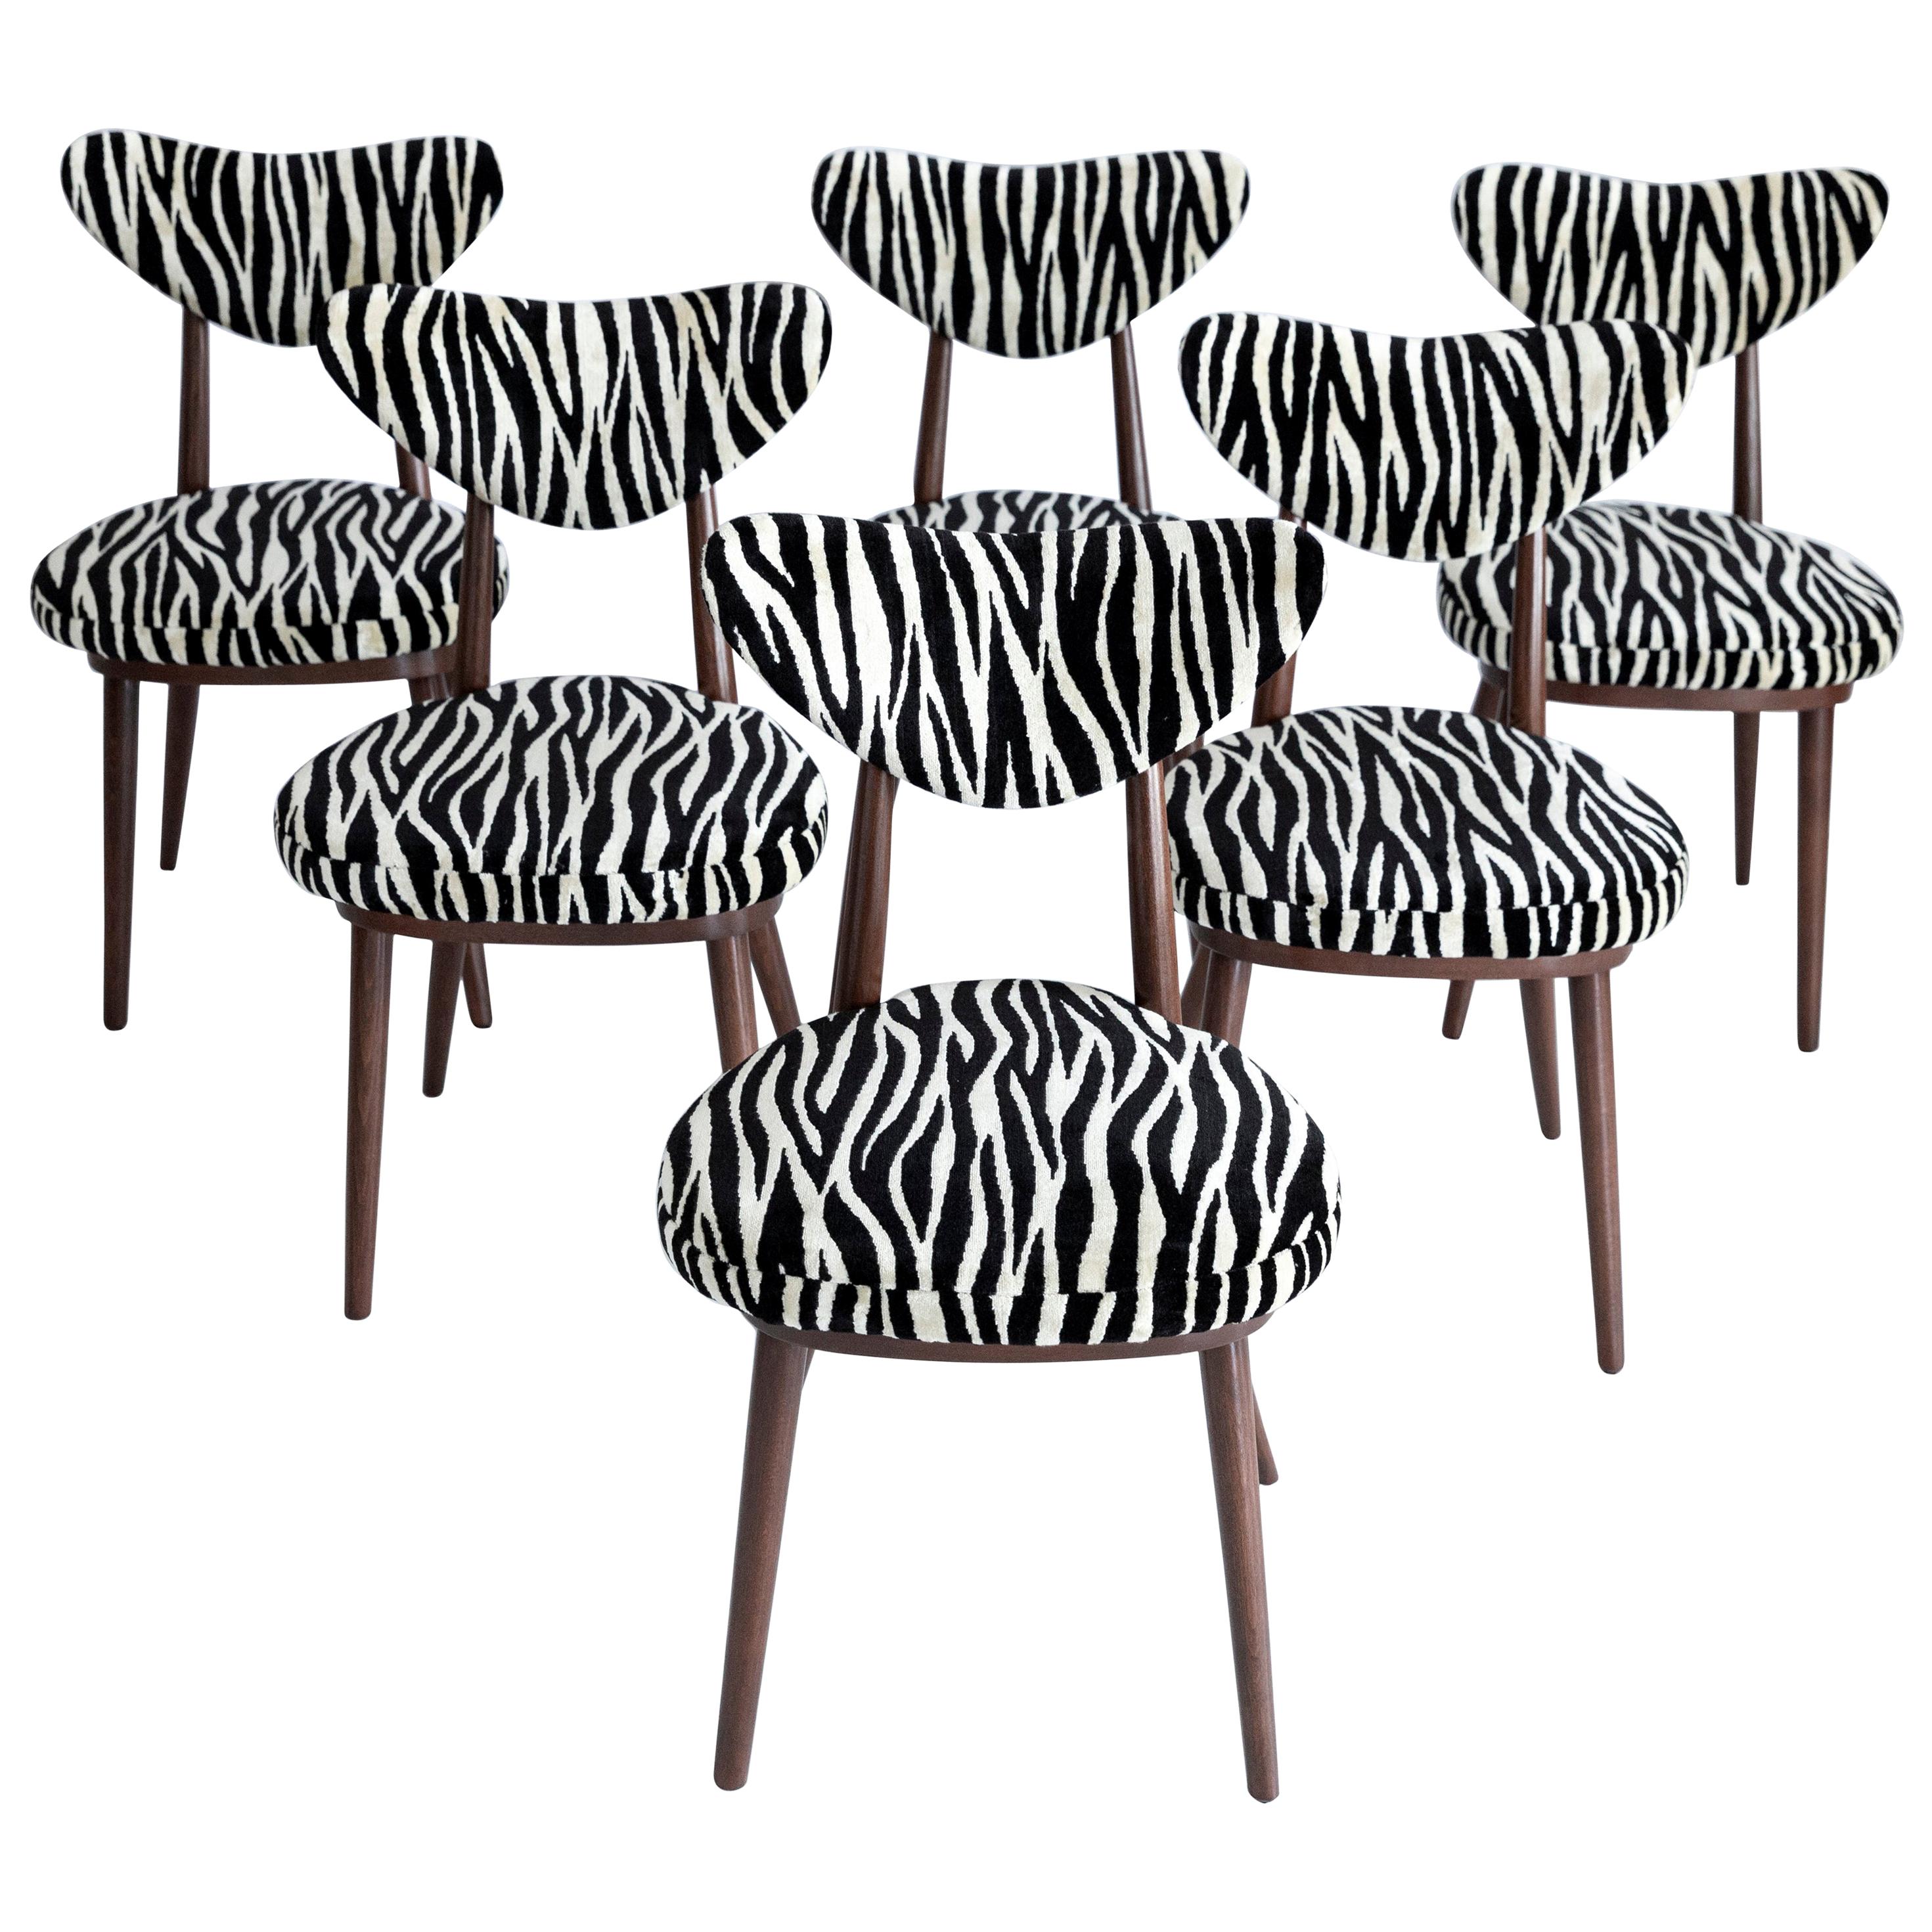 Six Midcentury Zebra Black White Heart Chairs, Hollywood Regency, Poland, 1960s